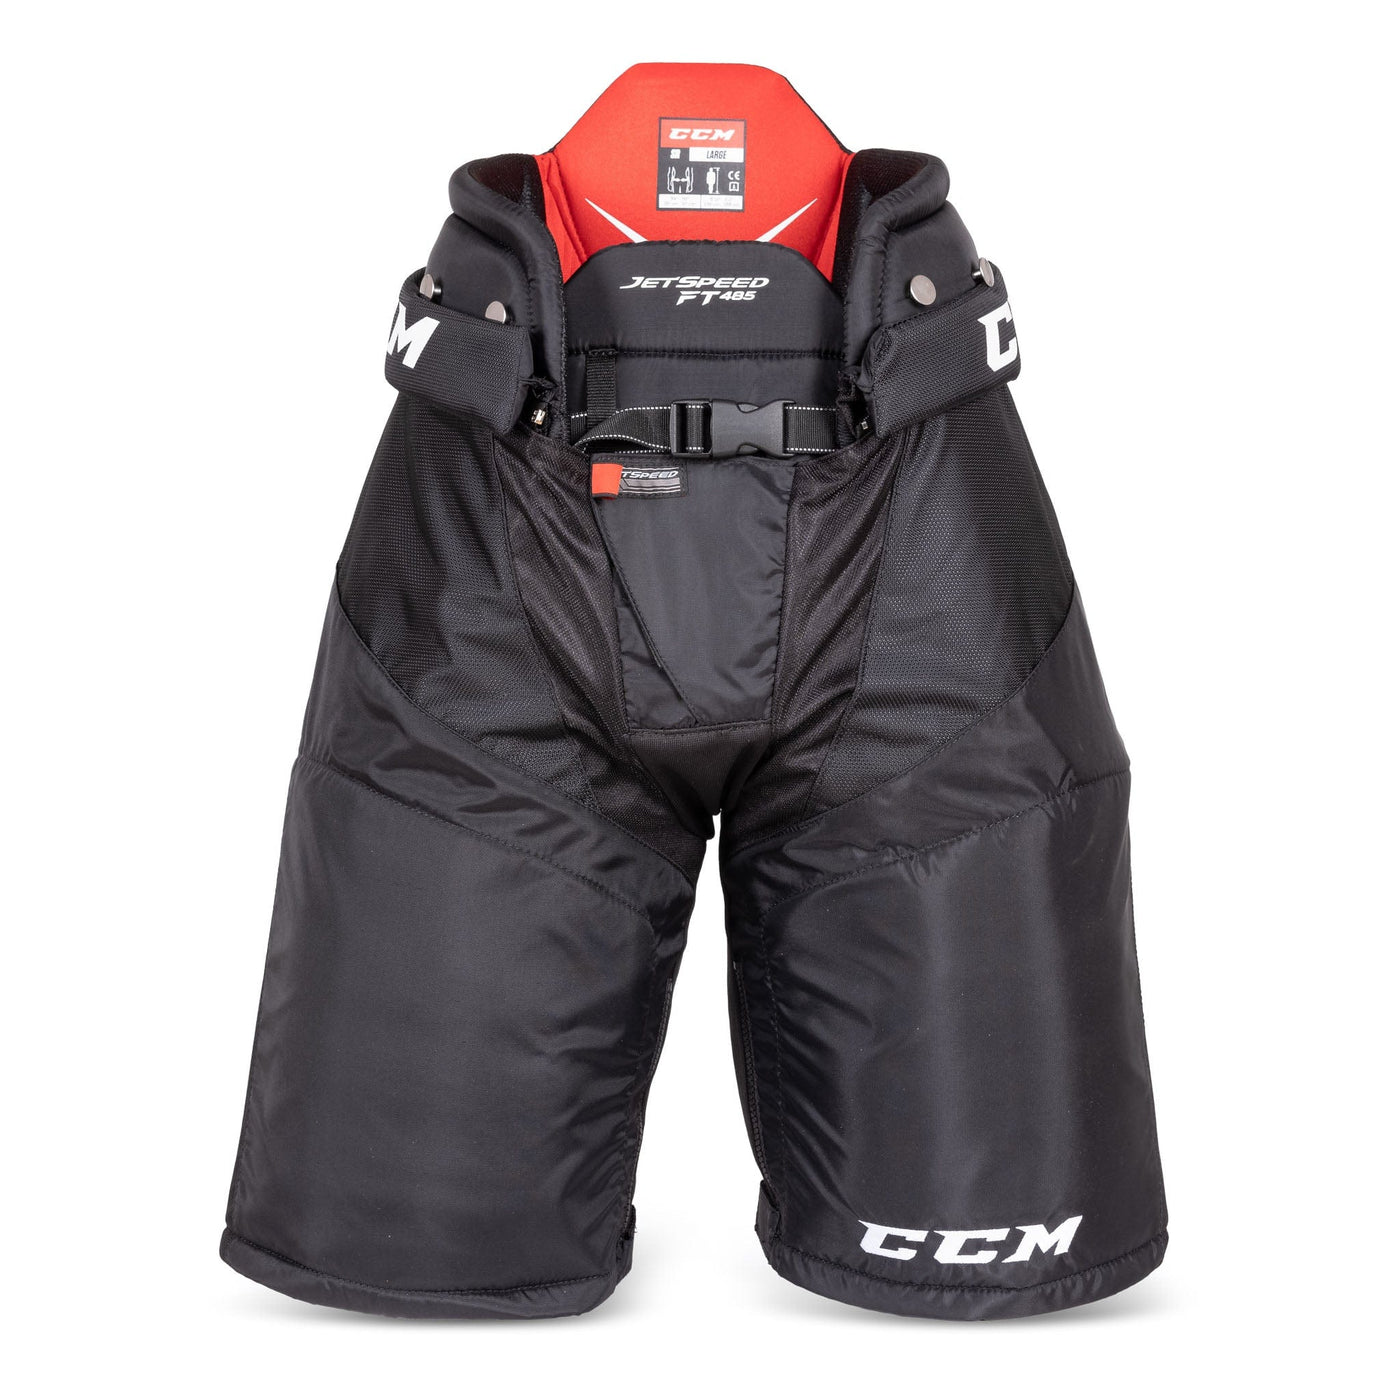 CCM Jetspeed FT485 Senior Hockey Pants